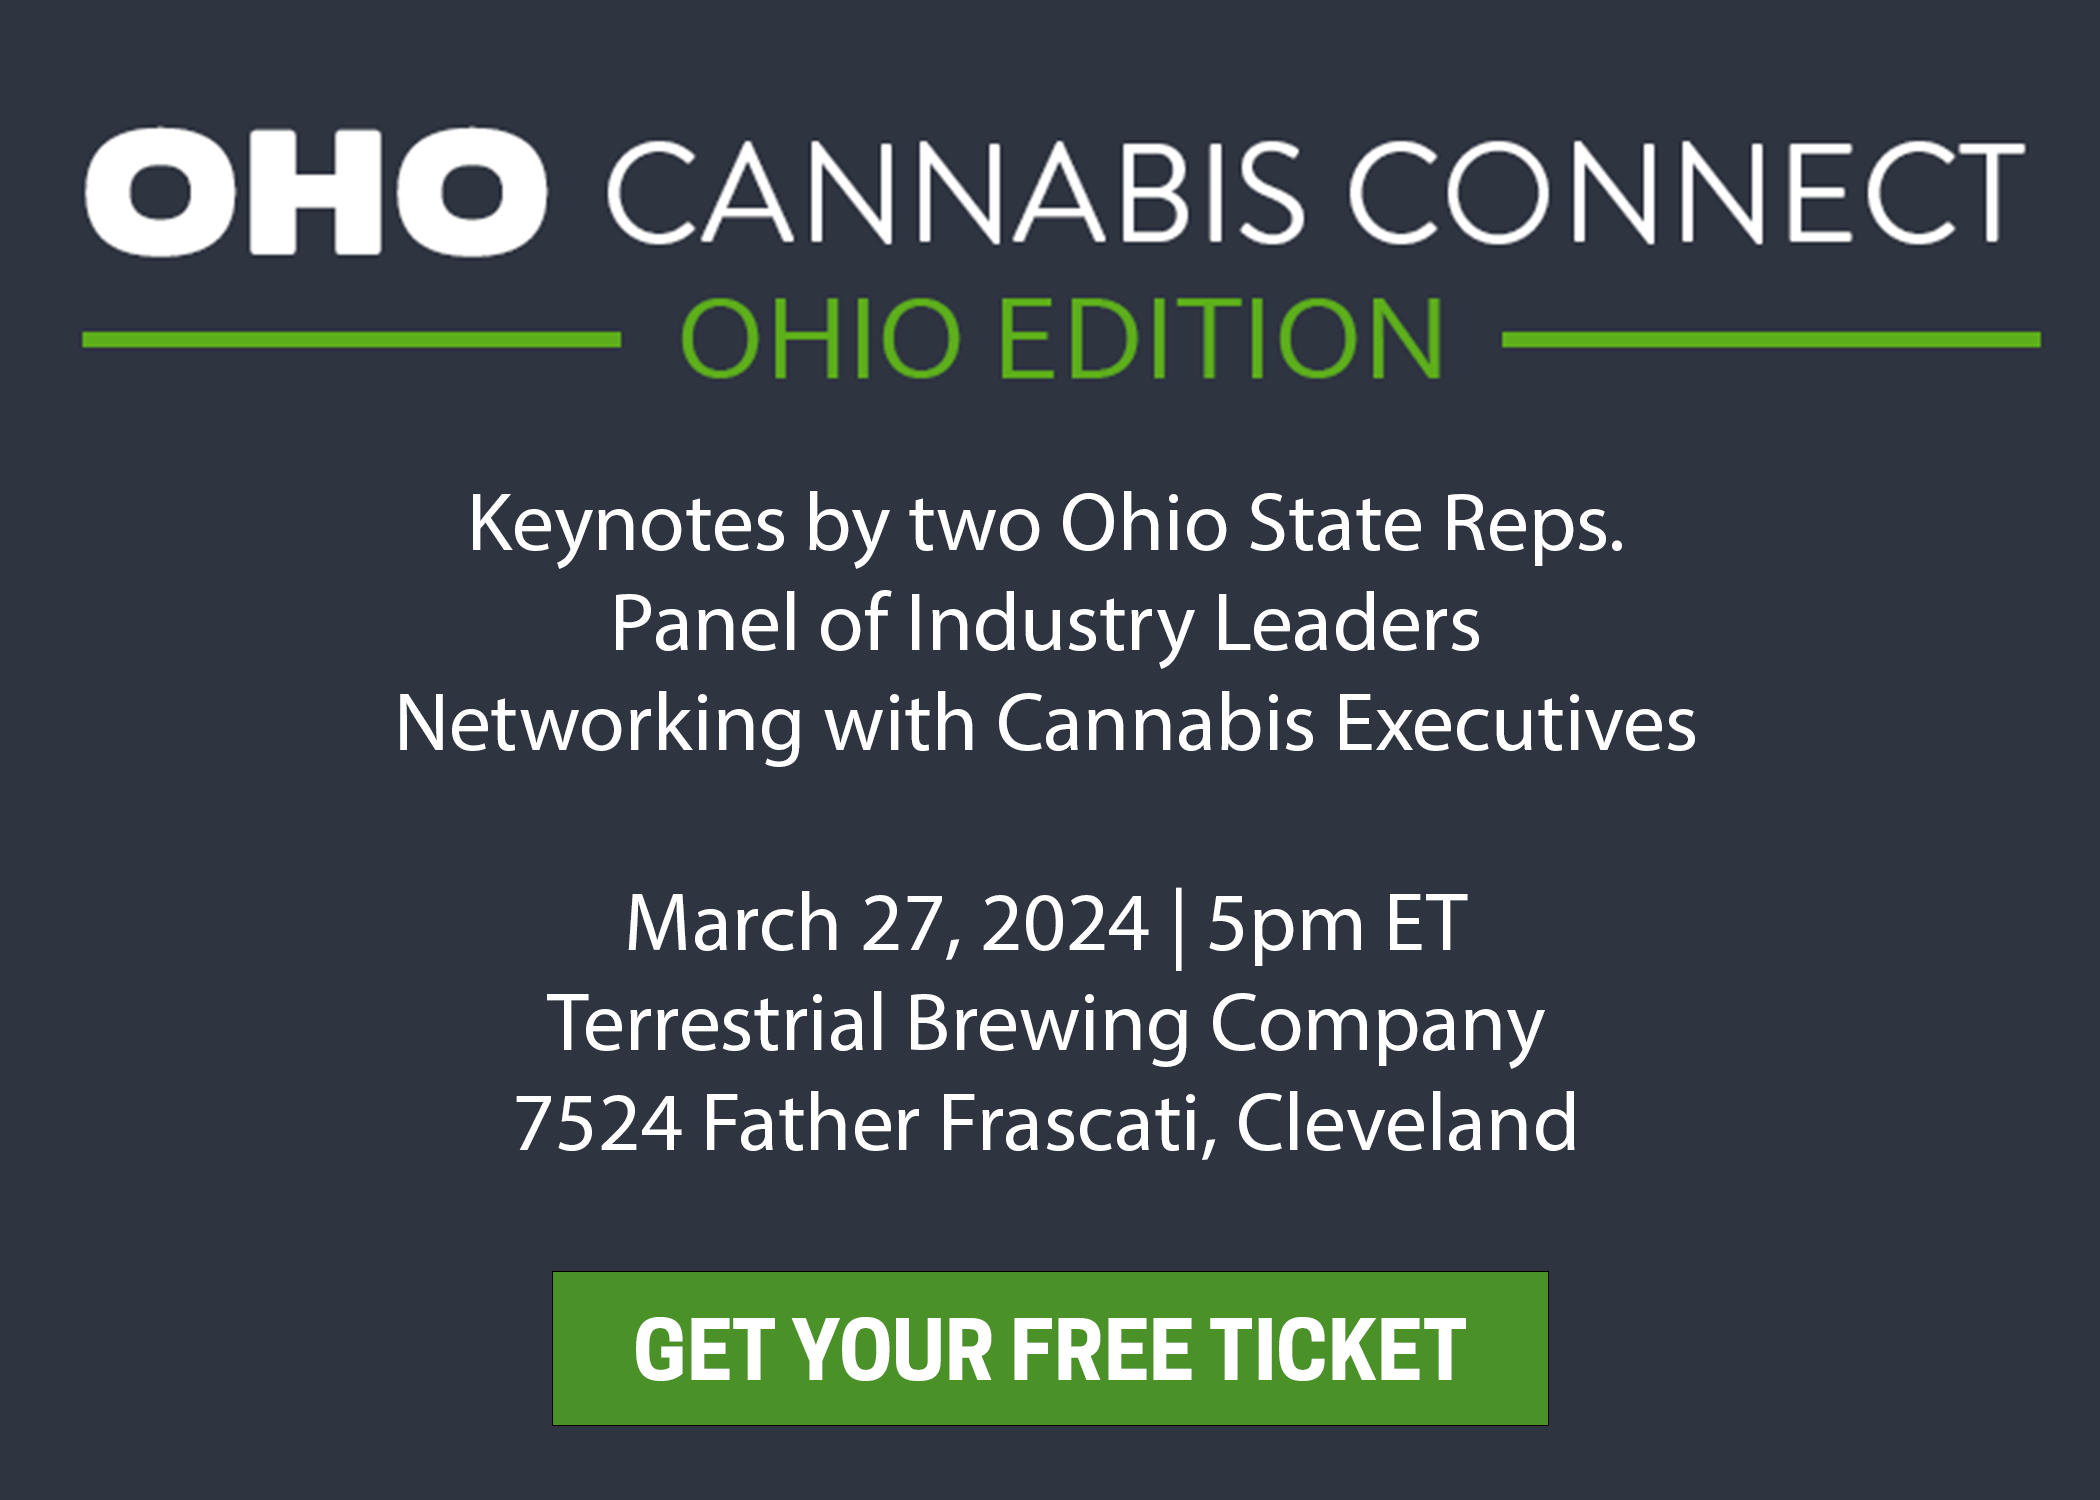 OHO Cannabis Connect - Ohio Edition 